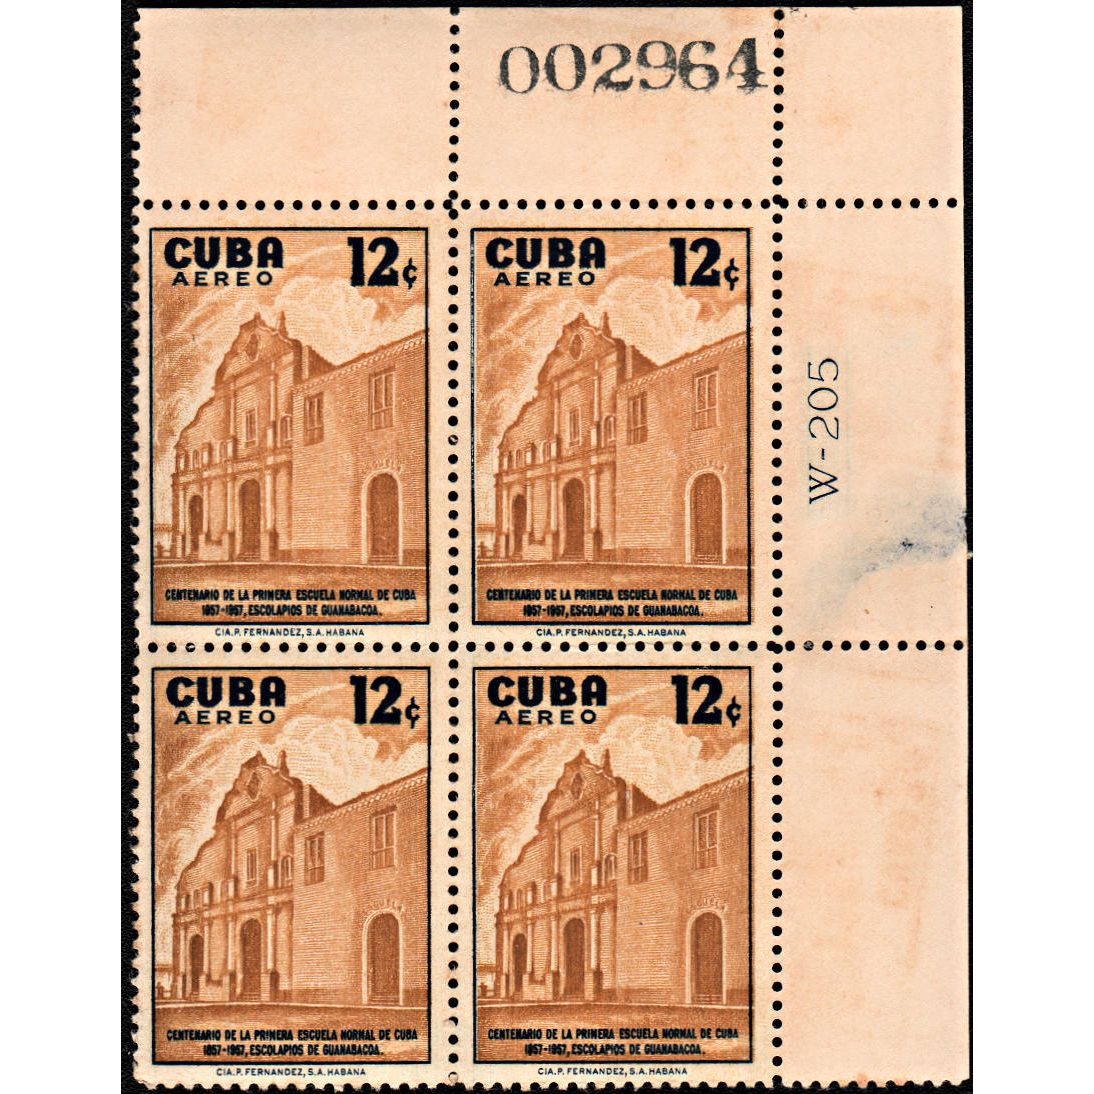 Vintage Cuba Stamps Blocks and Sheets > 1957-11-19 SC C173 Cuba